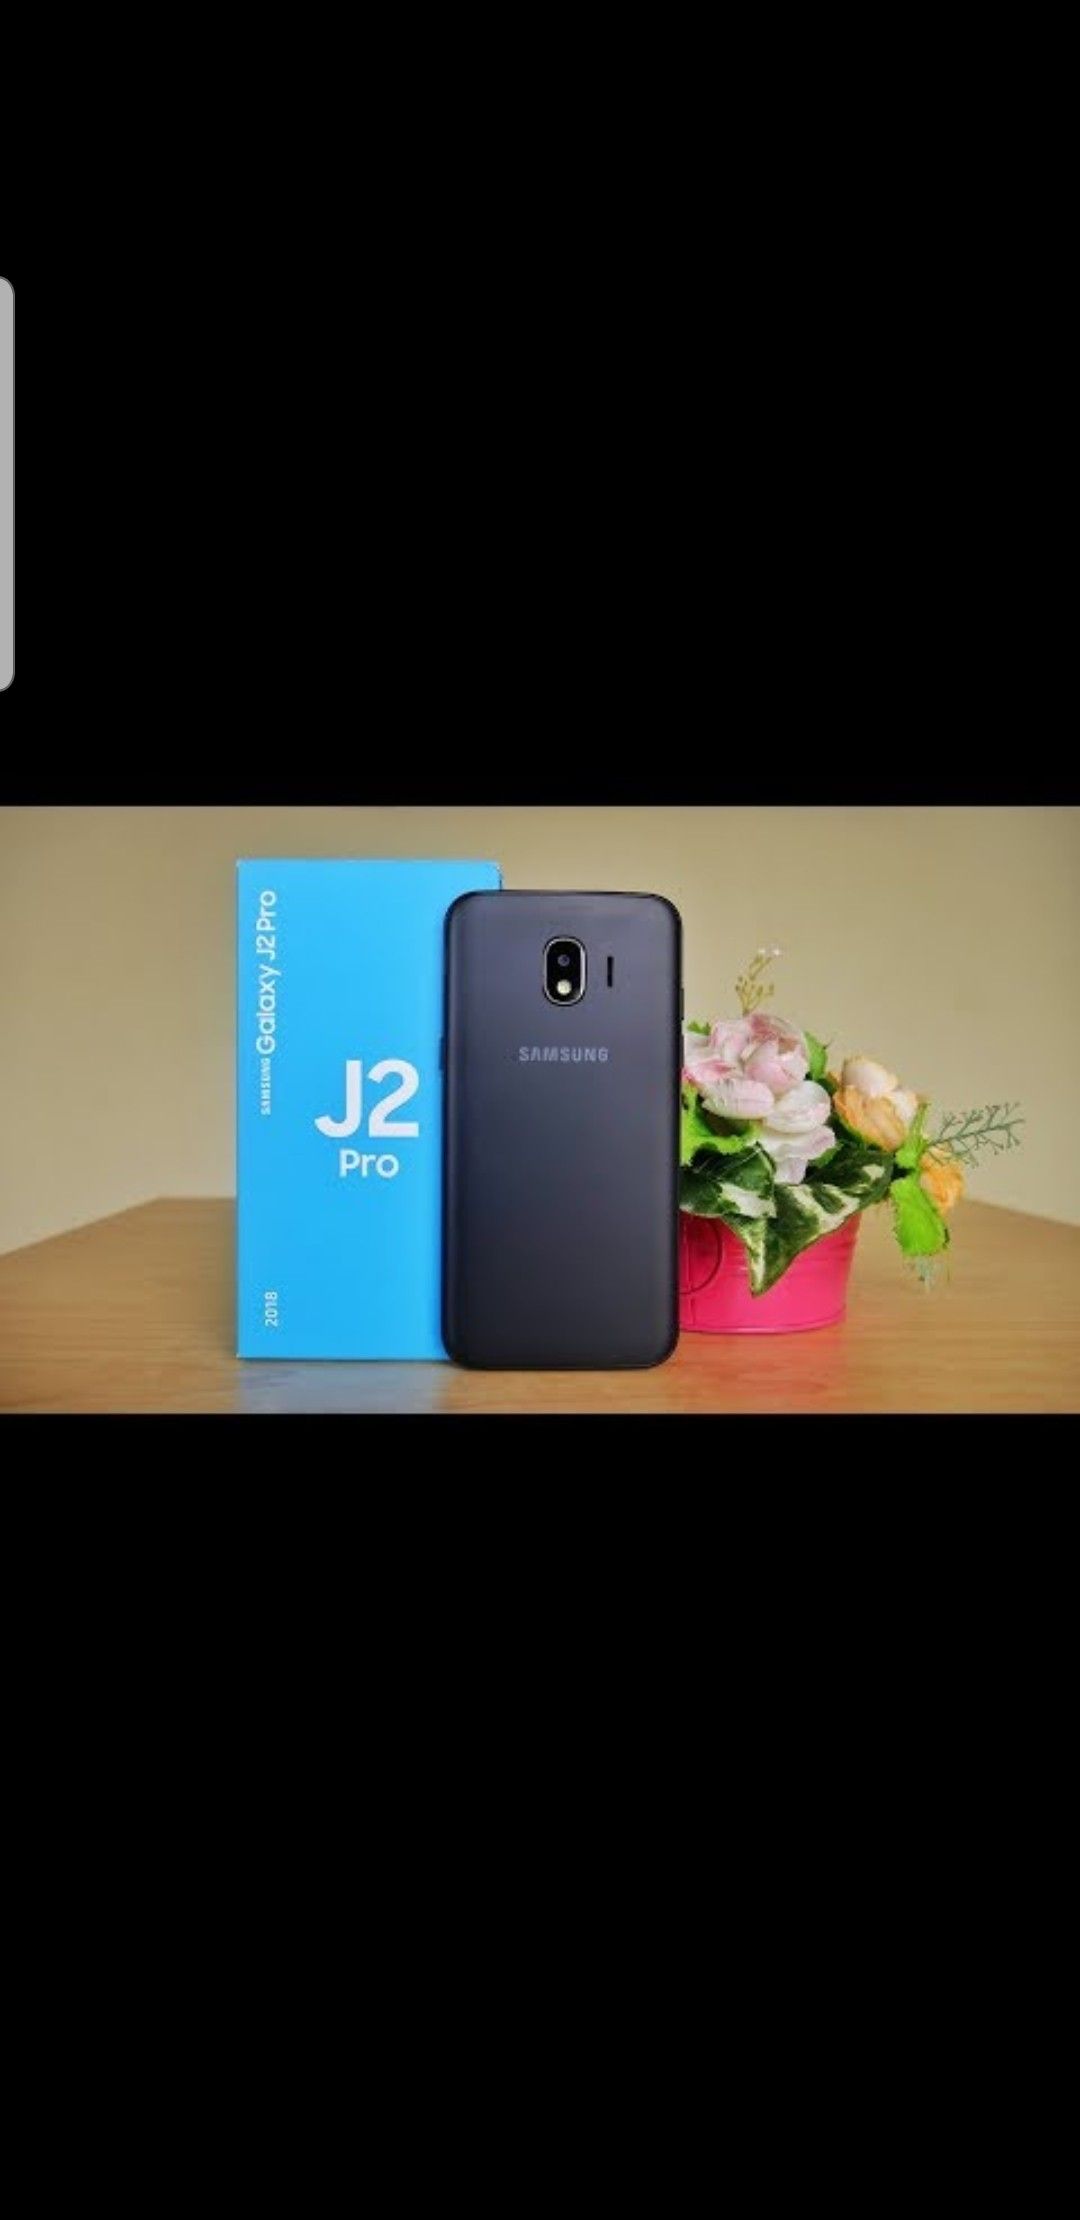 Samsung galaxy's j2 brand new unlocked